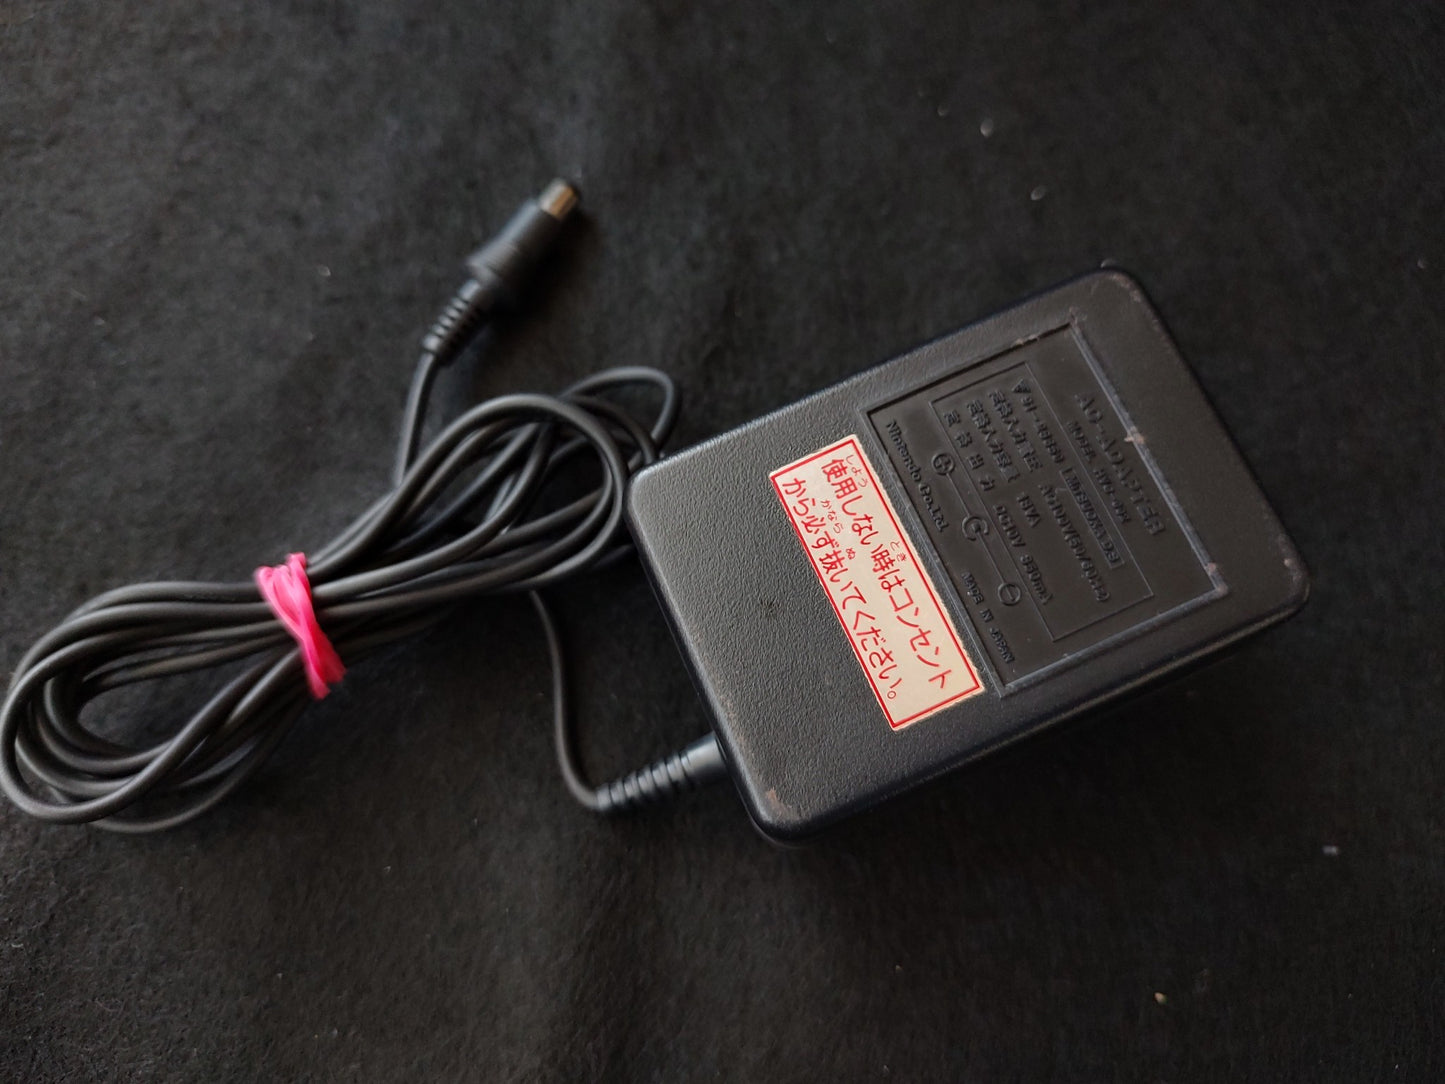 Nintendo Famicom NES HVC-001 Console, PSU, Manual, Flyer set, Working -f0603-